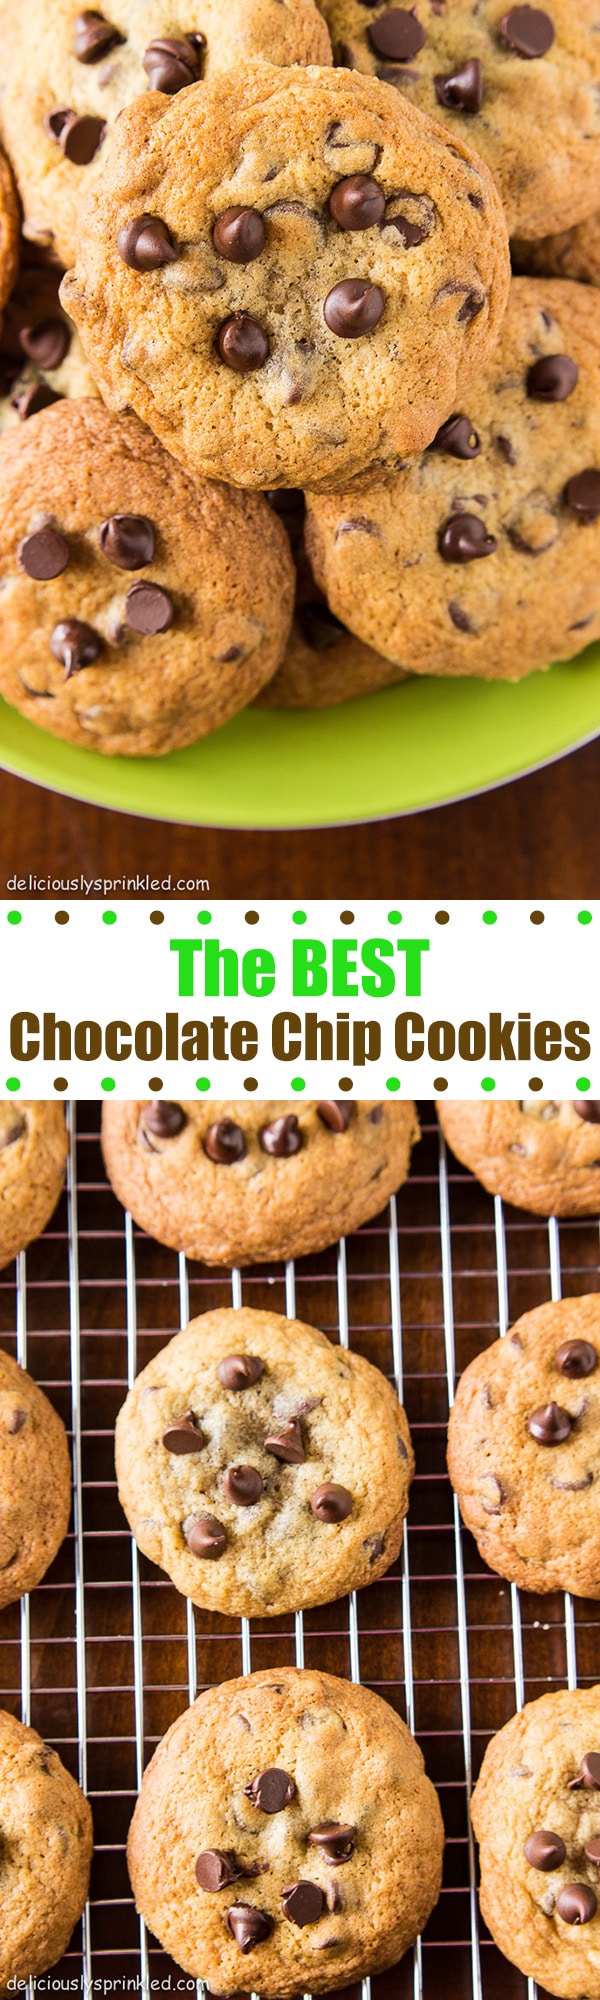 homemade chocolate chip cookies pinterest image